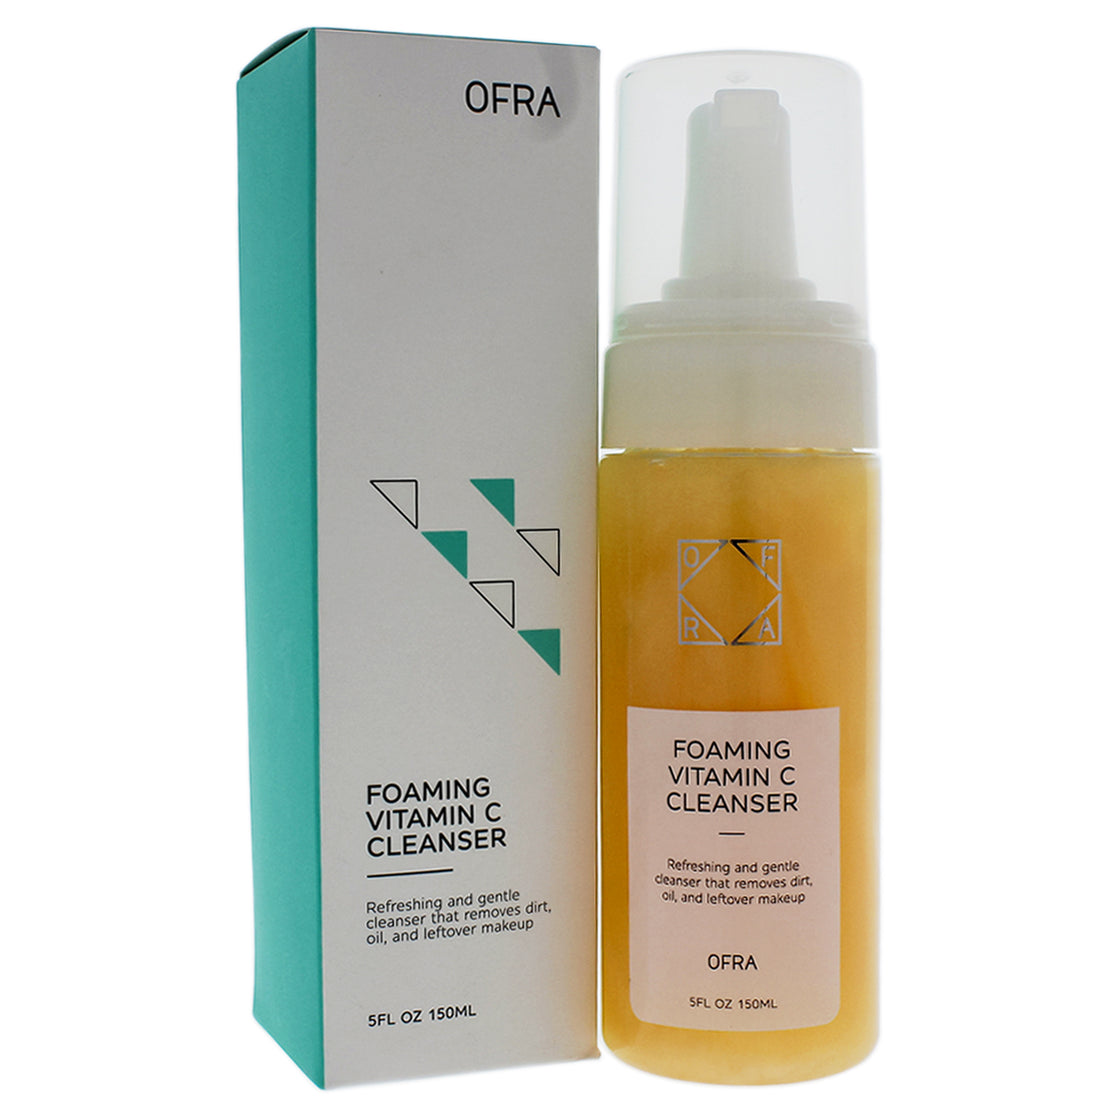 Foaming Vitamin C Cleanser by Ofra for Women - 5 oz Cleanser